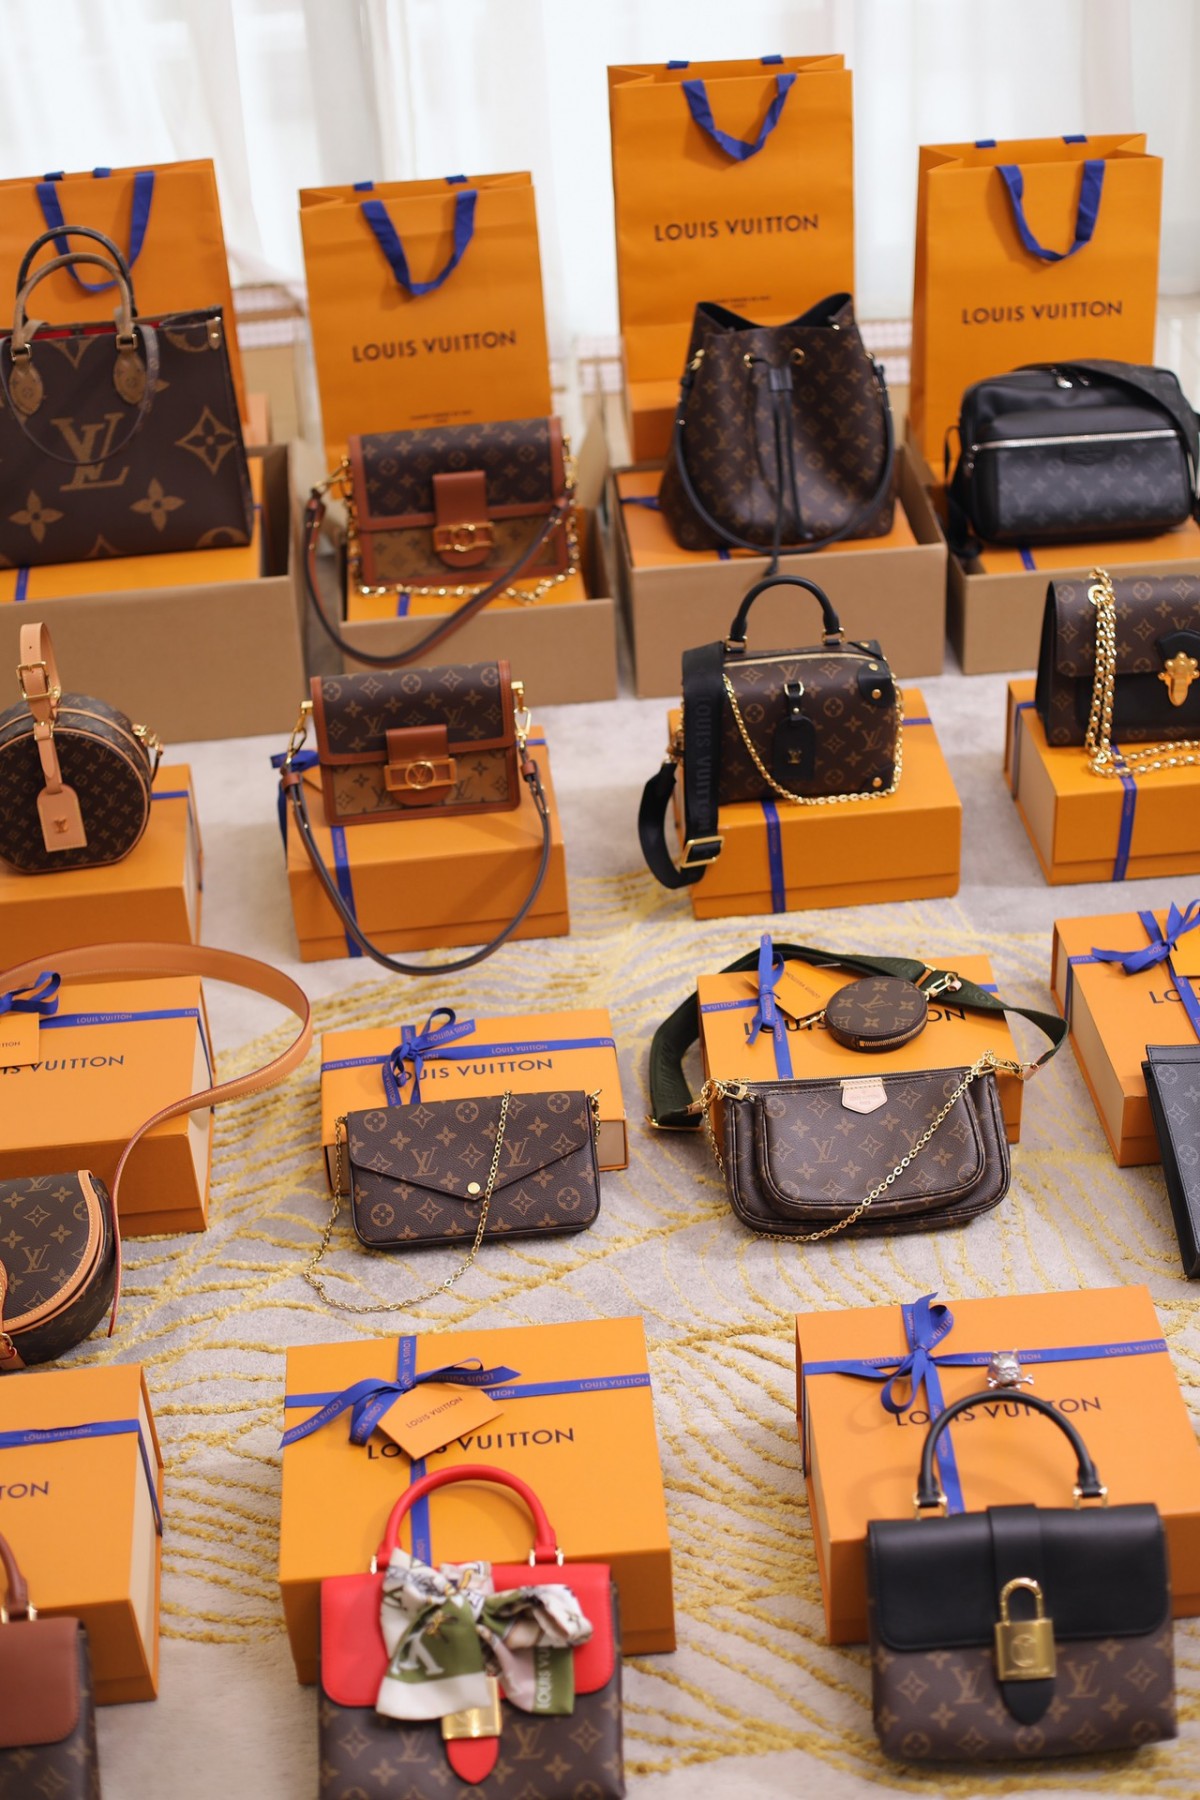 Best replica bags online shopping sites (2022 latest)-Best Quality Fake Louis Vuitton Bag Online Store, Replica designer bag ru